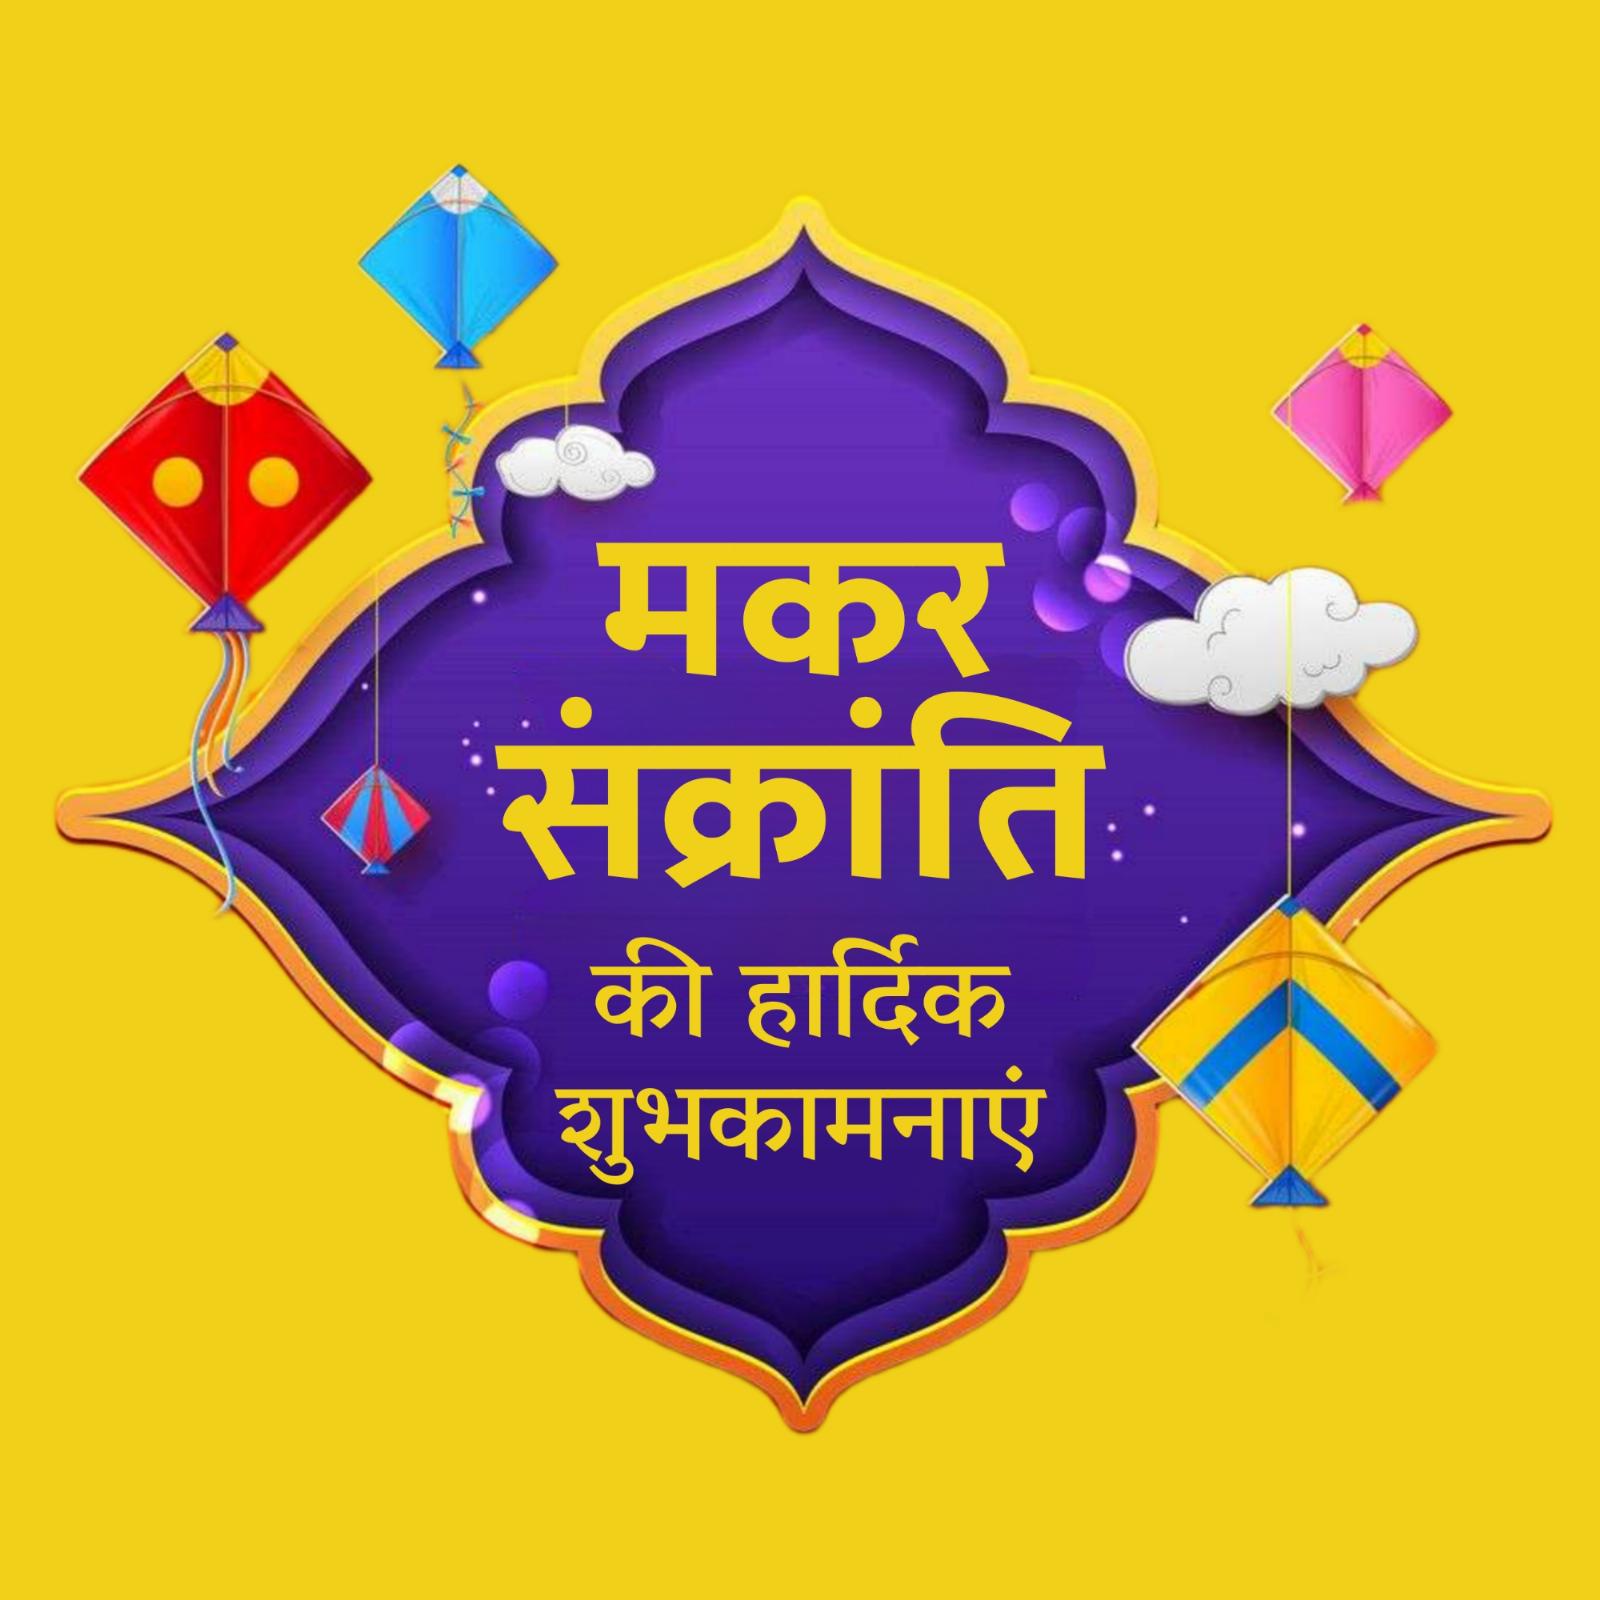 New Makar Sankranti Ki Hardik Shubhkamnaye Images in Hindi HD Download